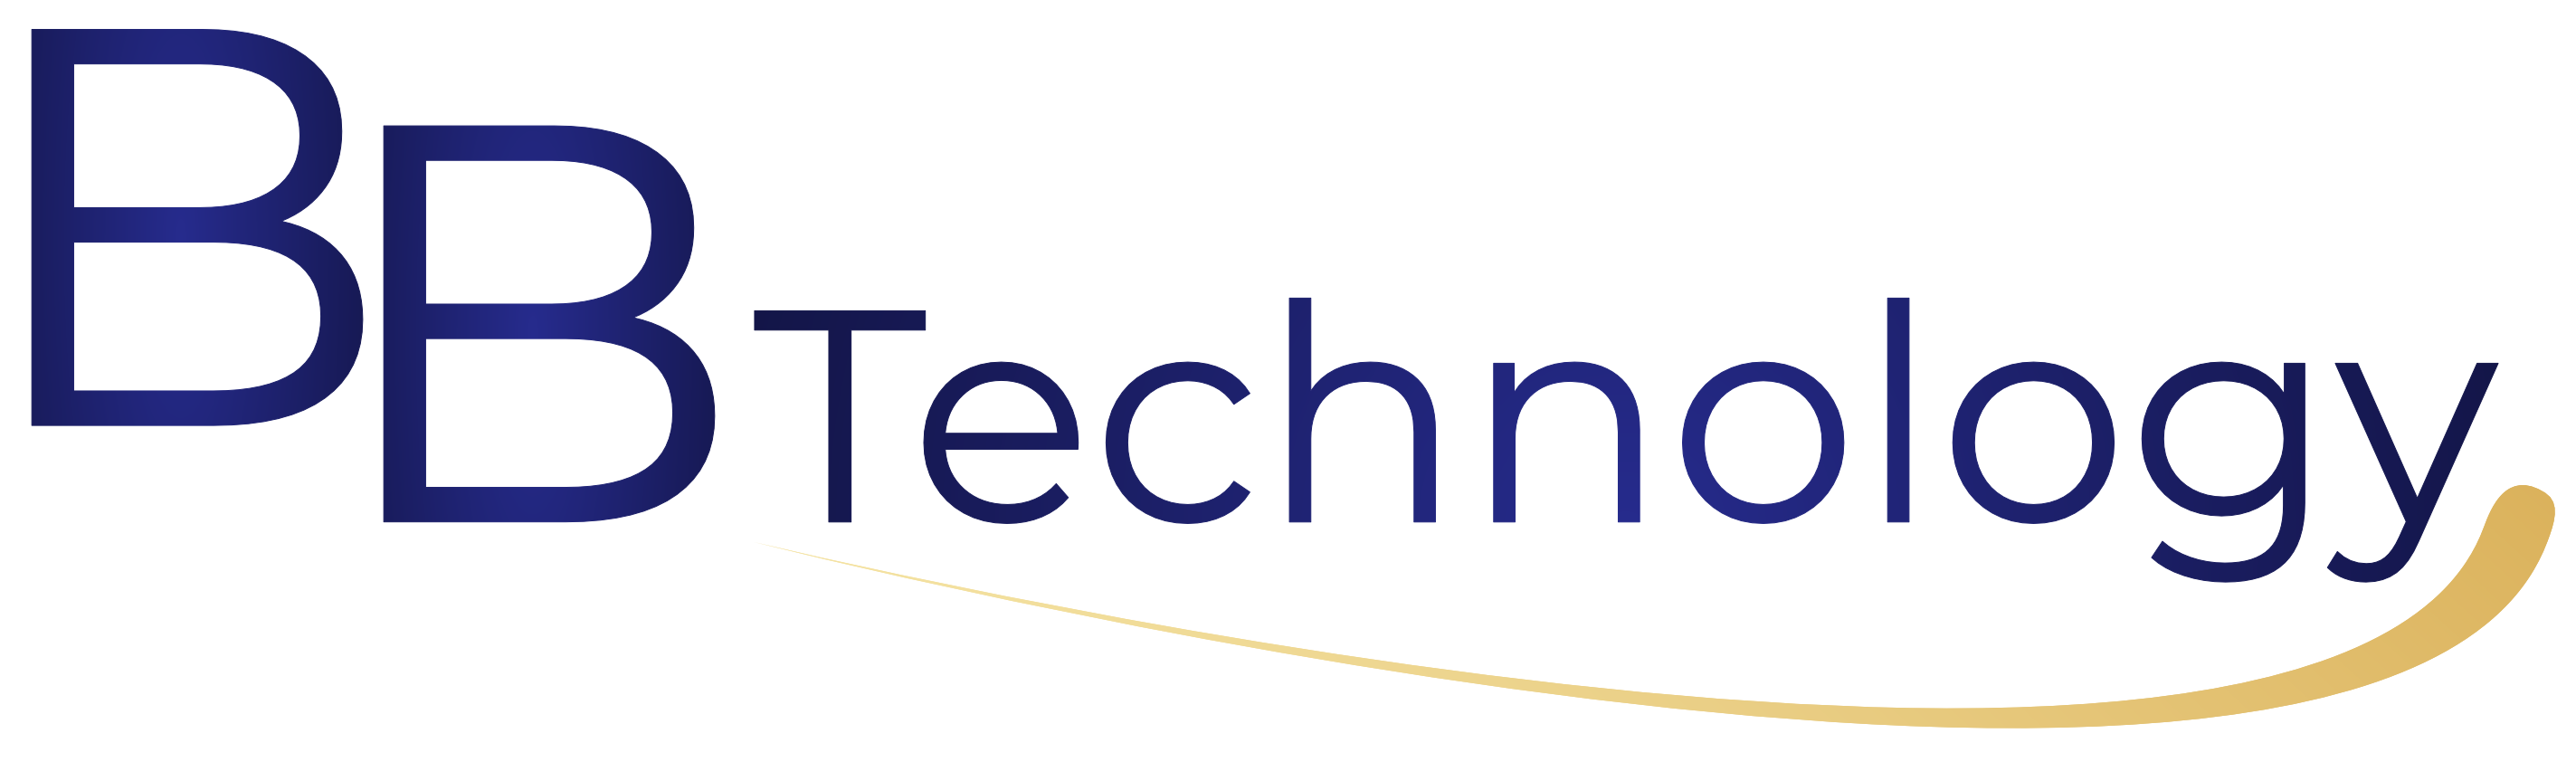 BB Technology logo